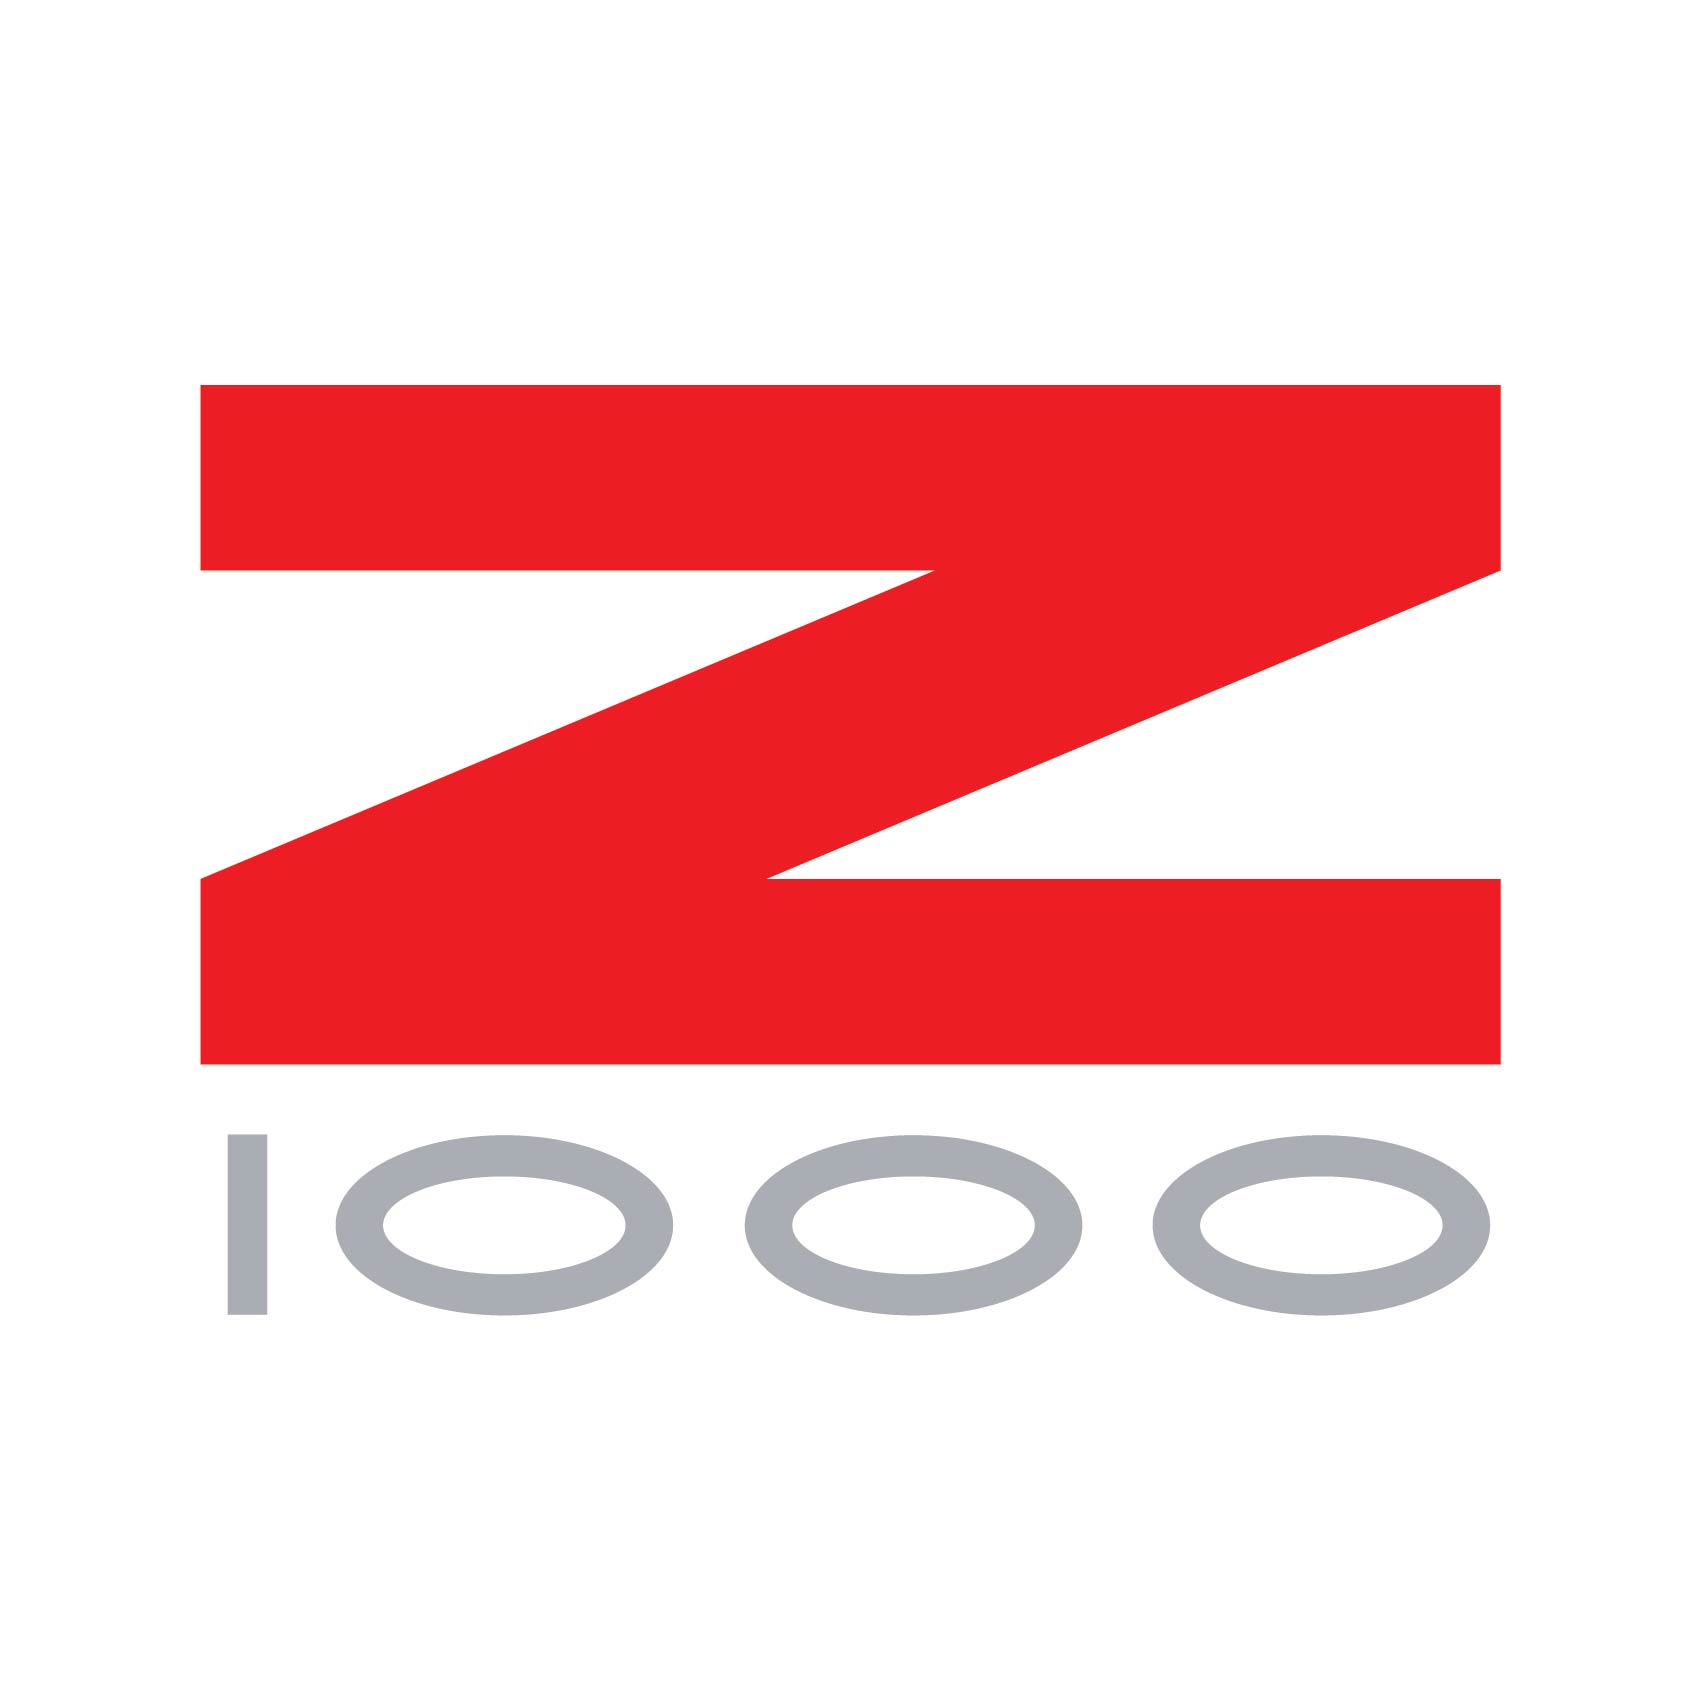 stickers-kawasaki-z-1000-logo-ref66kawasaki-autocollant-kawasaki-moto-sticker-pour-moto-sport